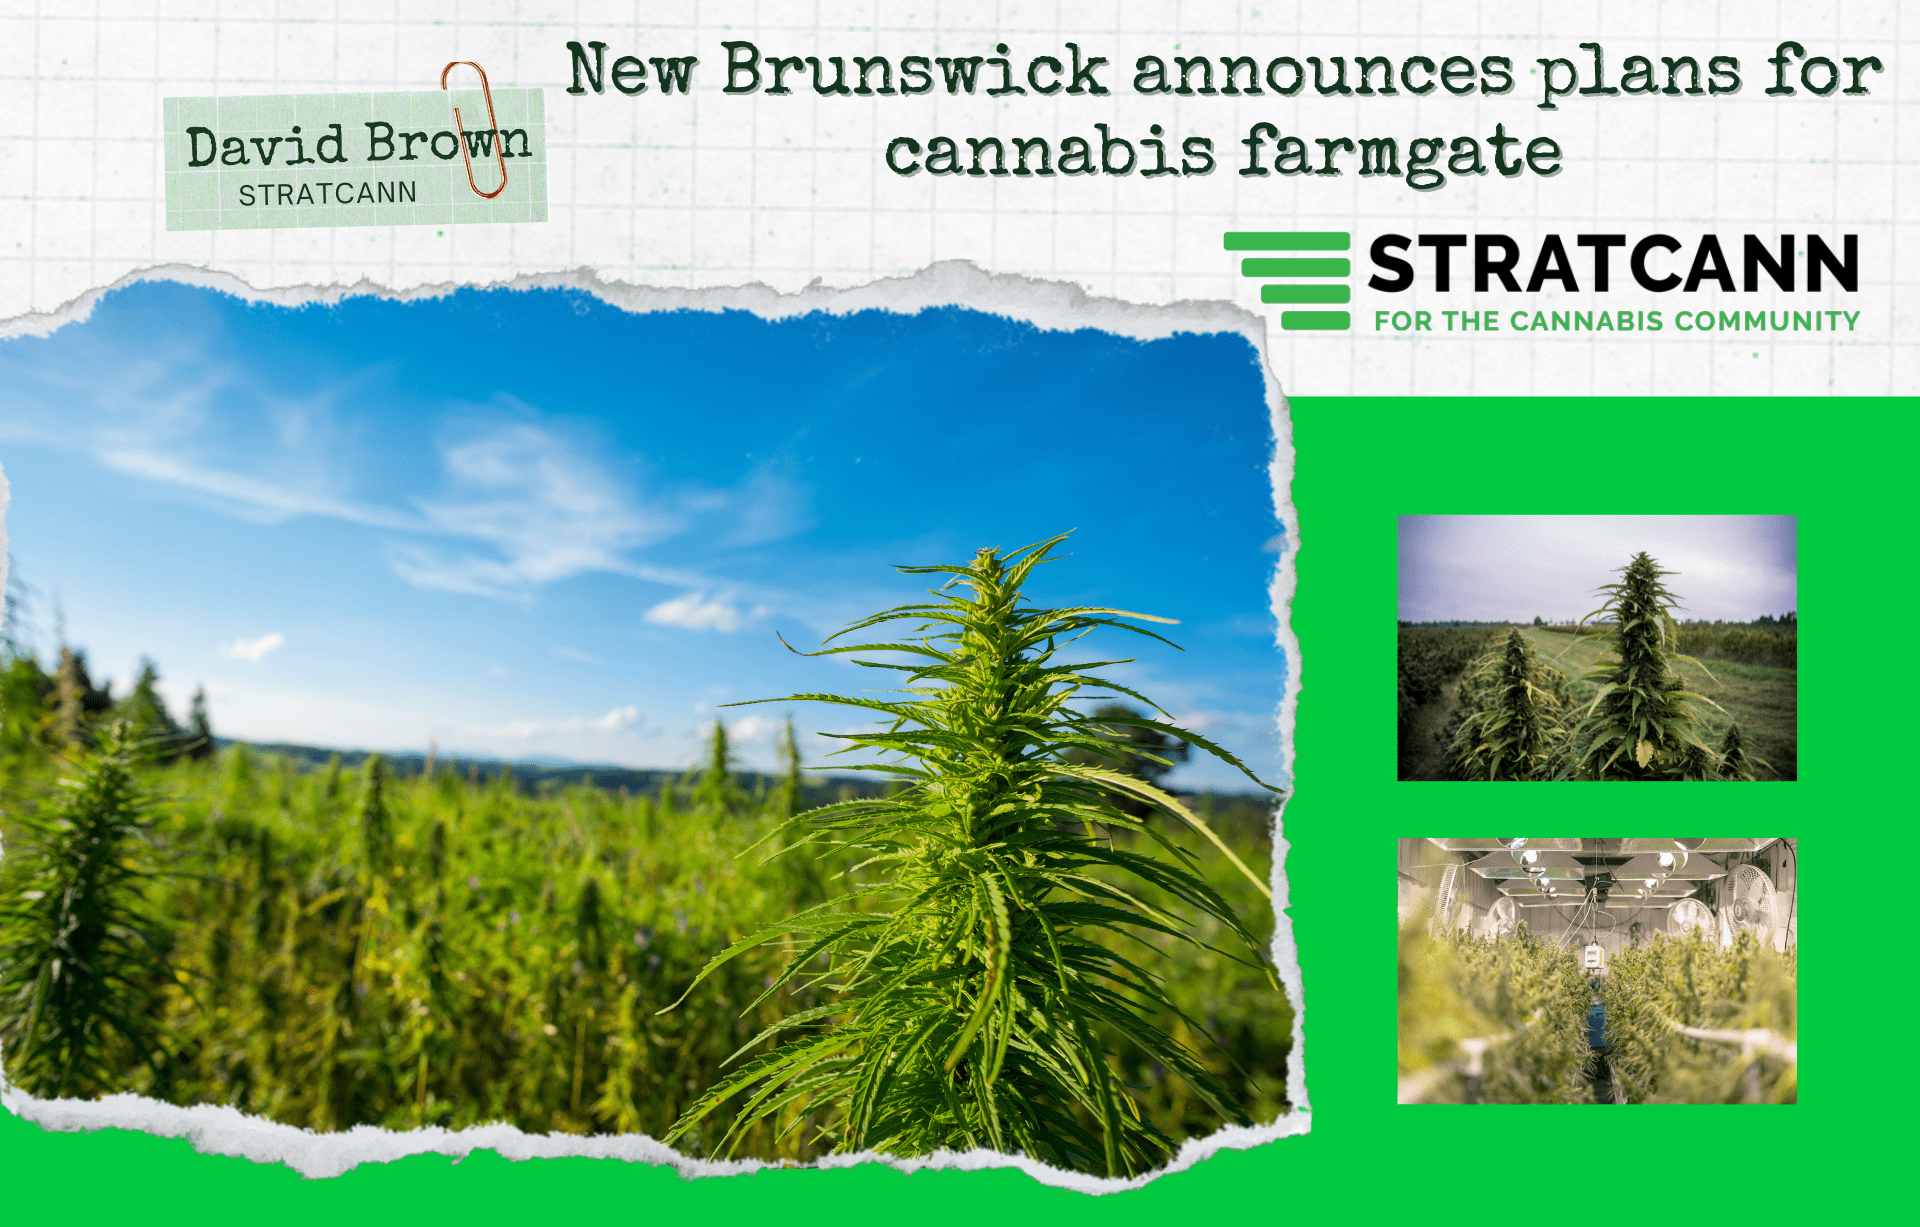 New Brunswick Announces Plans for Cannabis Farmgate